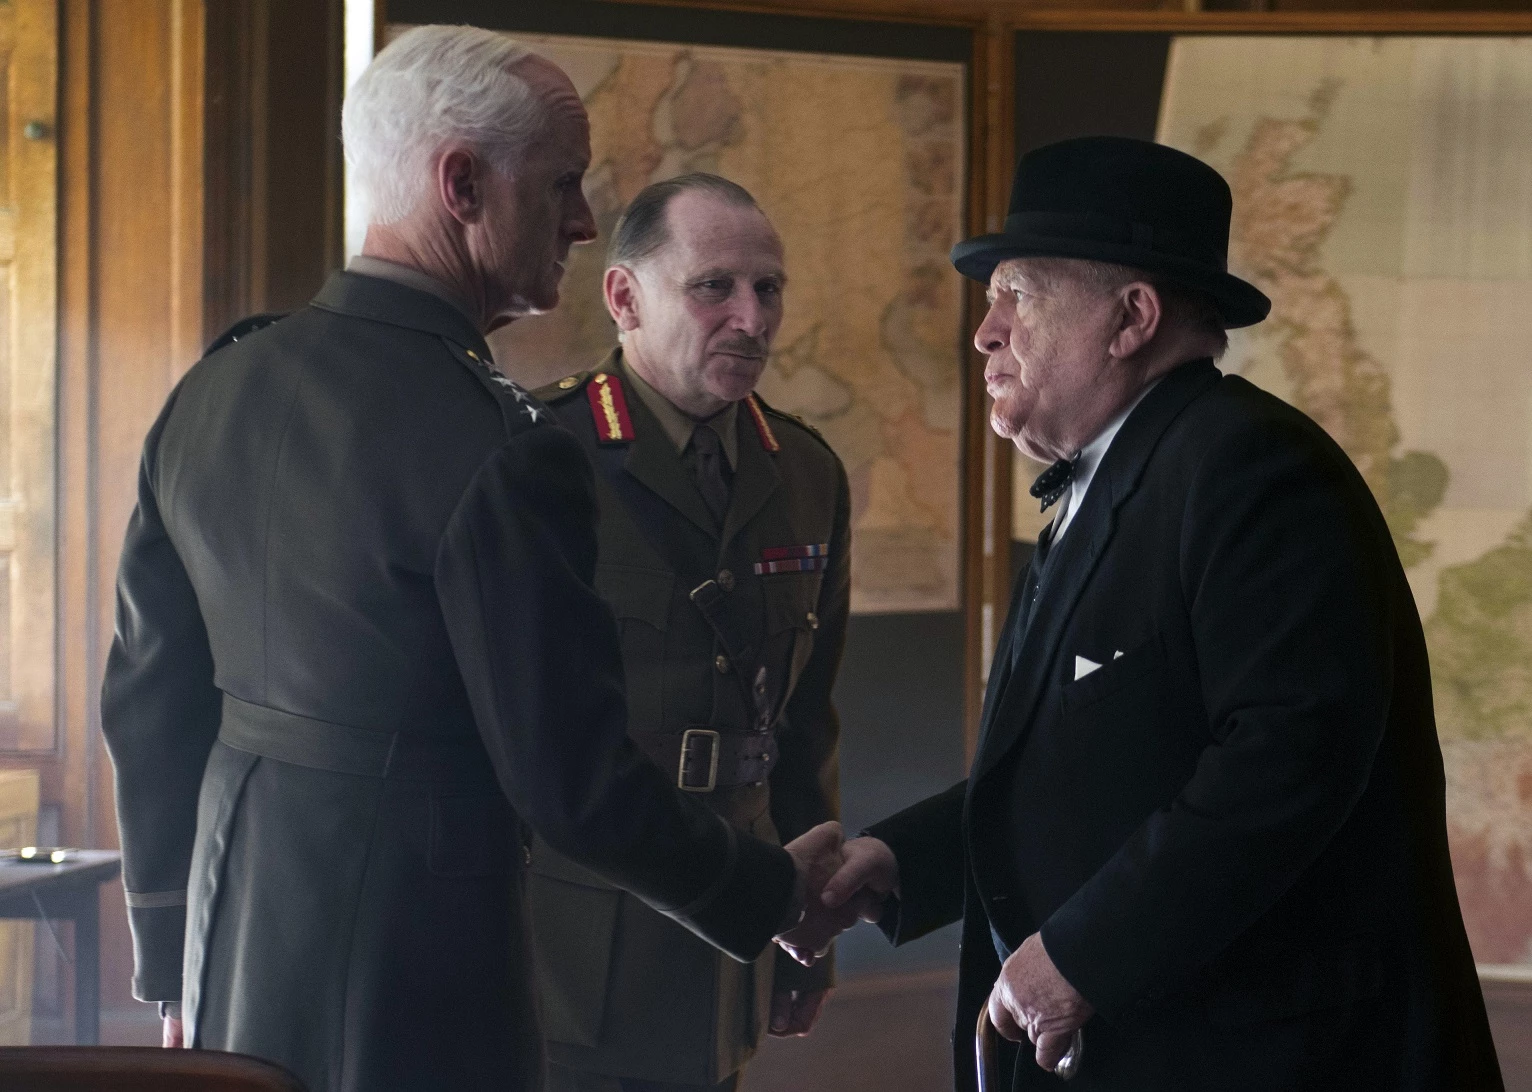 The Churchill (2017) movies cast - movies like Darkest Hour